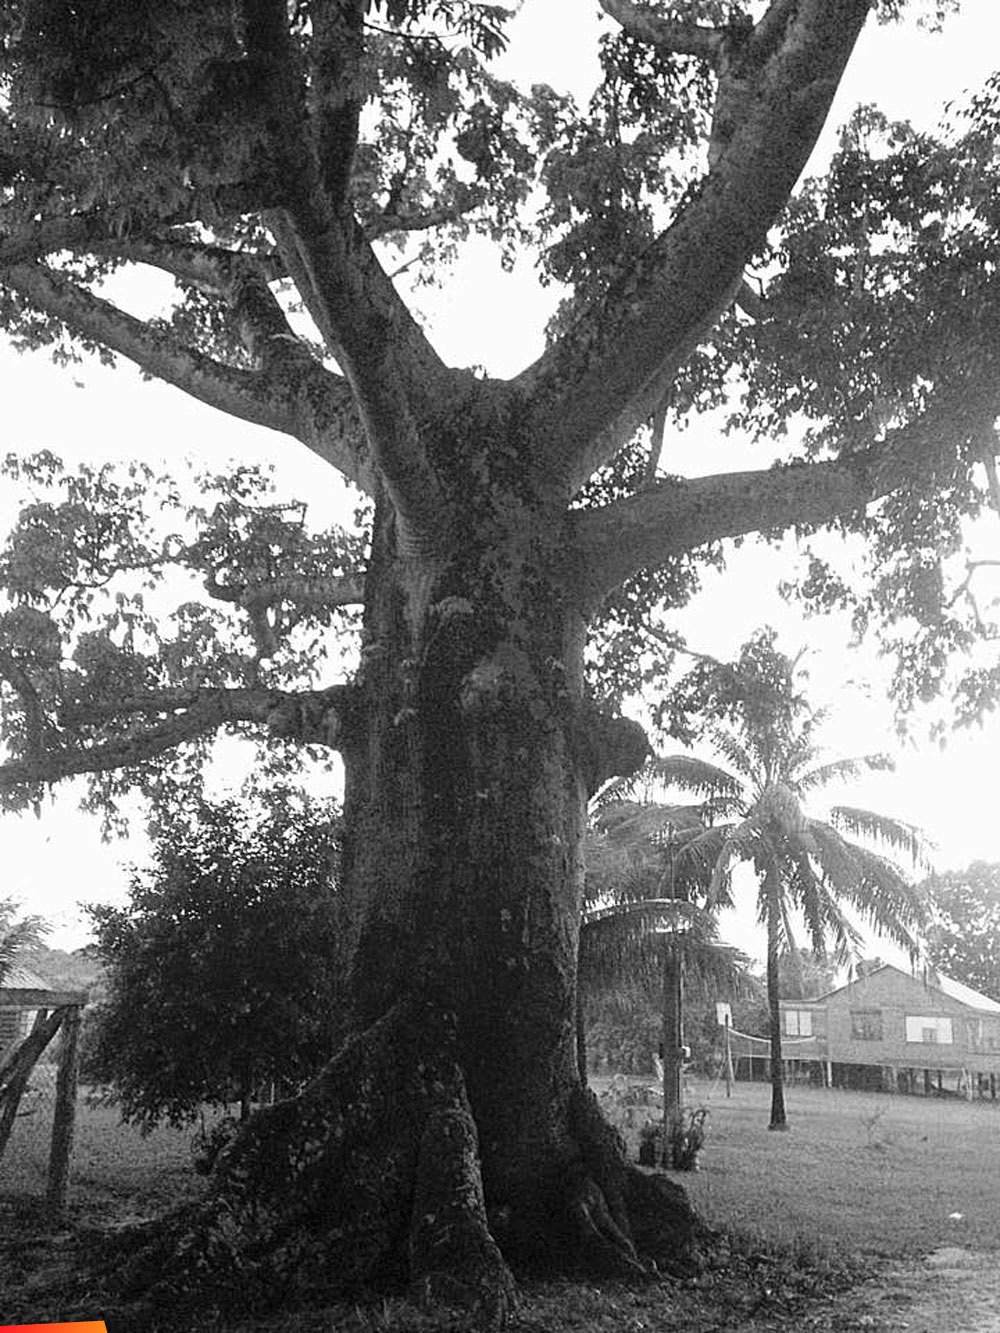 The sacred ceiba tree of life located at Yo-Creek Village